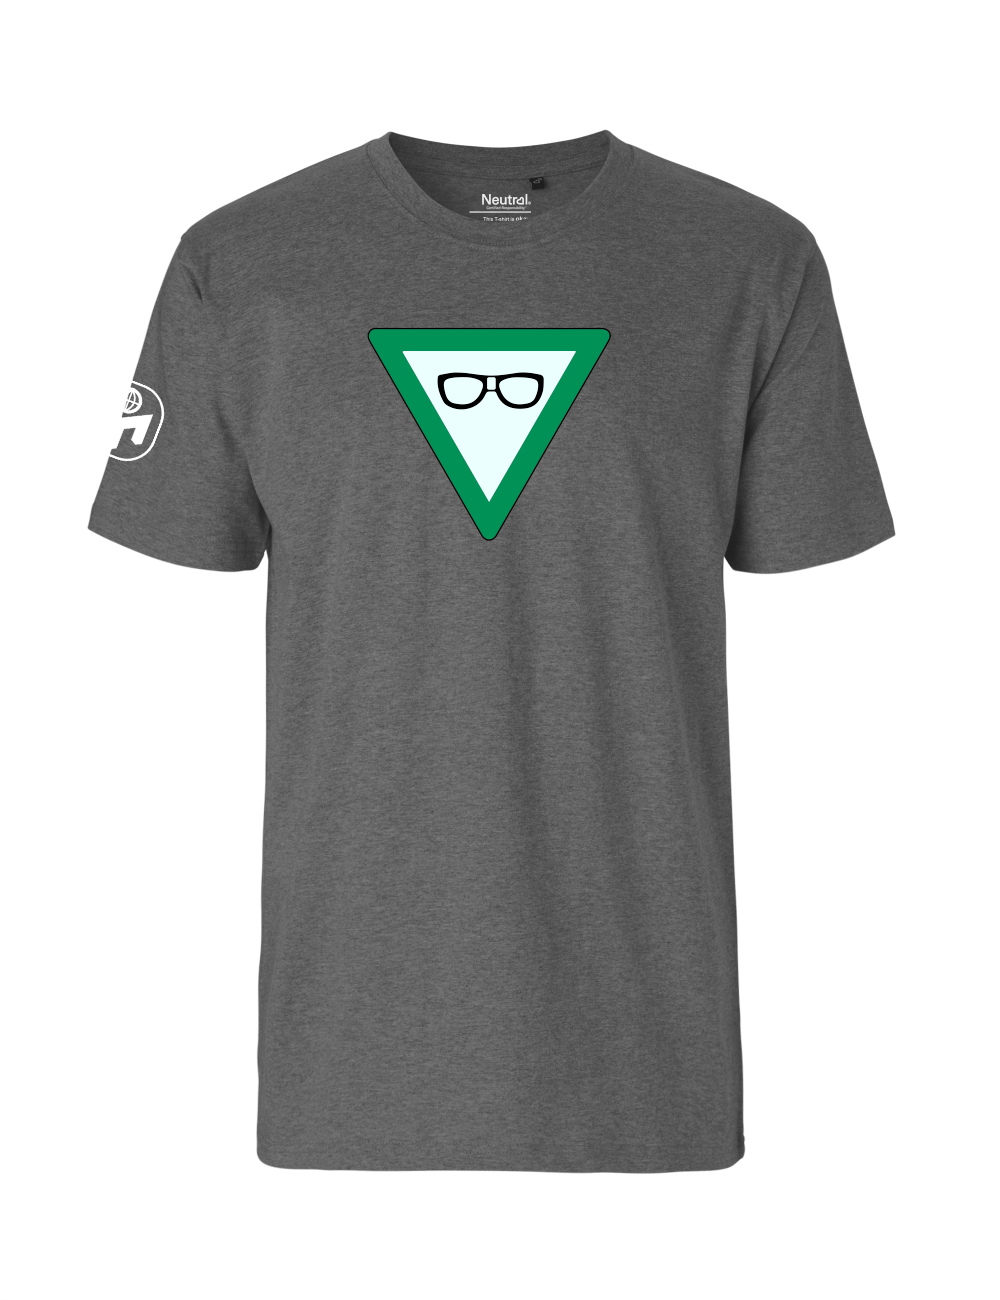 T-Shirt Herren "Nerdschutz" Premium